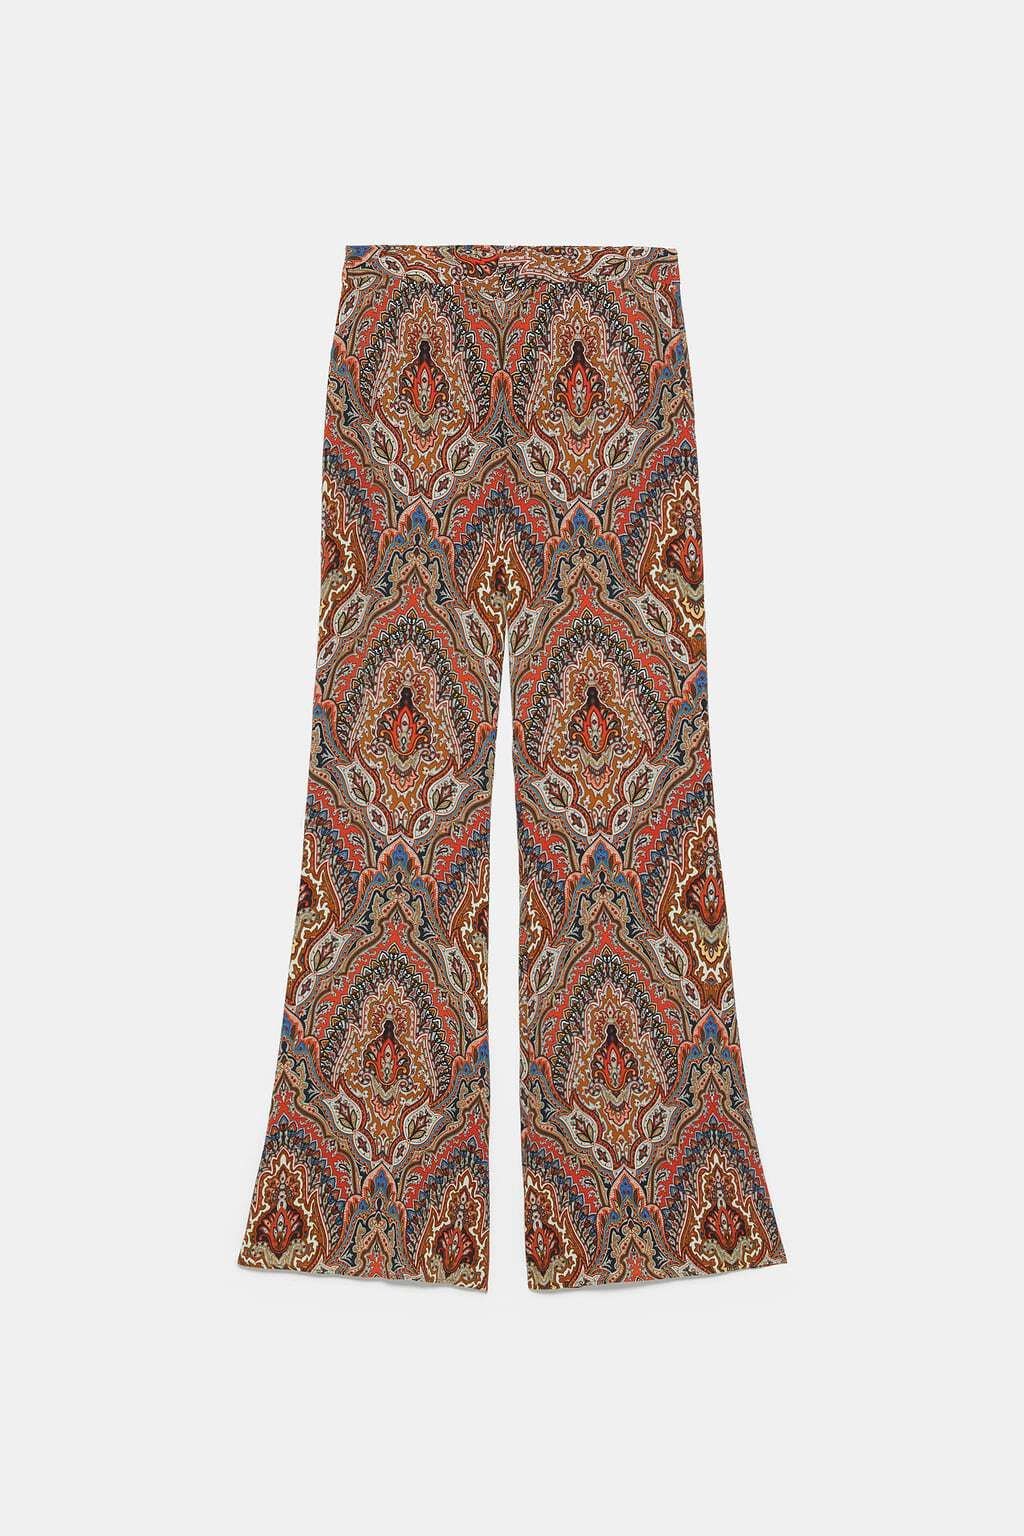 Zara Paisley Print Trousers.jpg